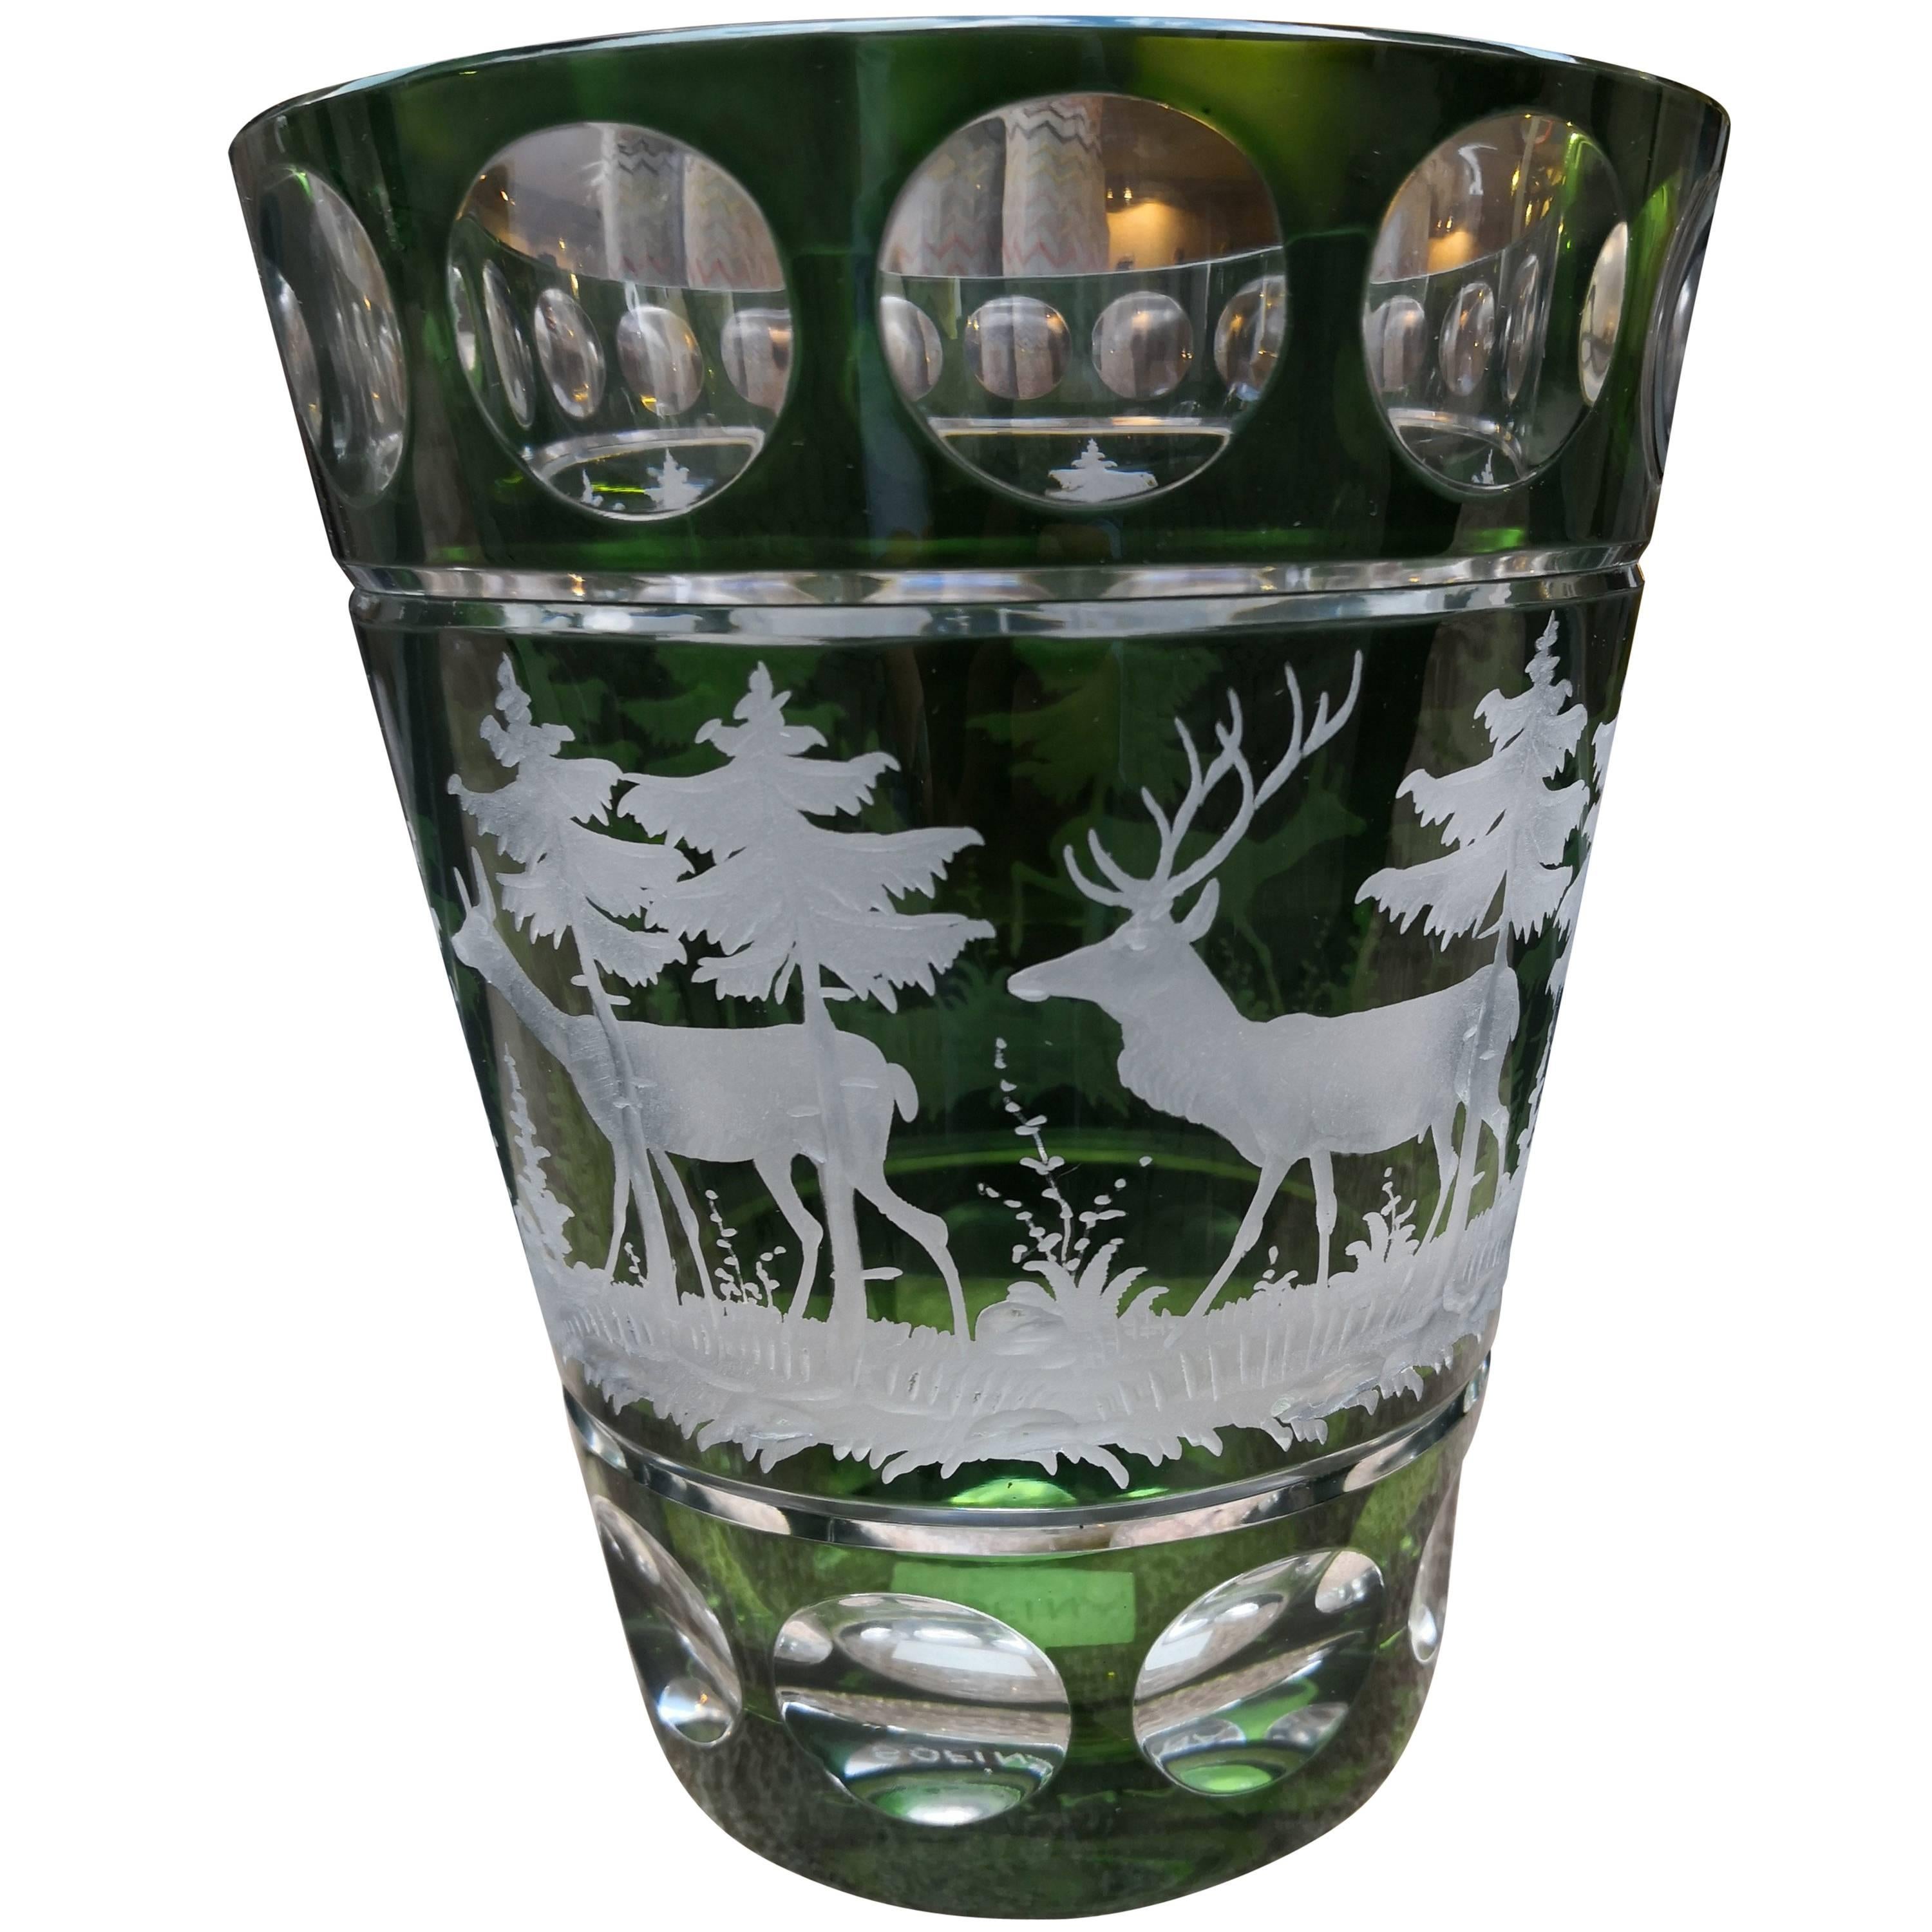 Black Forest Vase Green Crystal with Hunting Decor Sofina Boutique Kitzbuehel